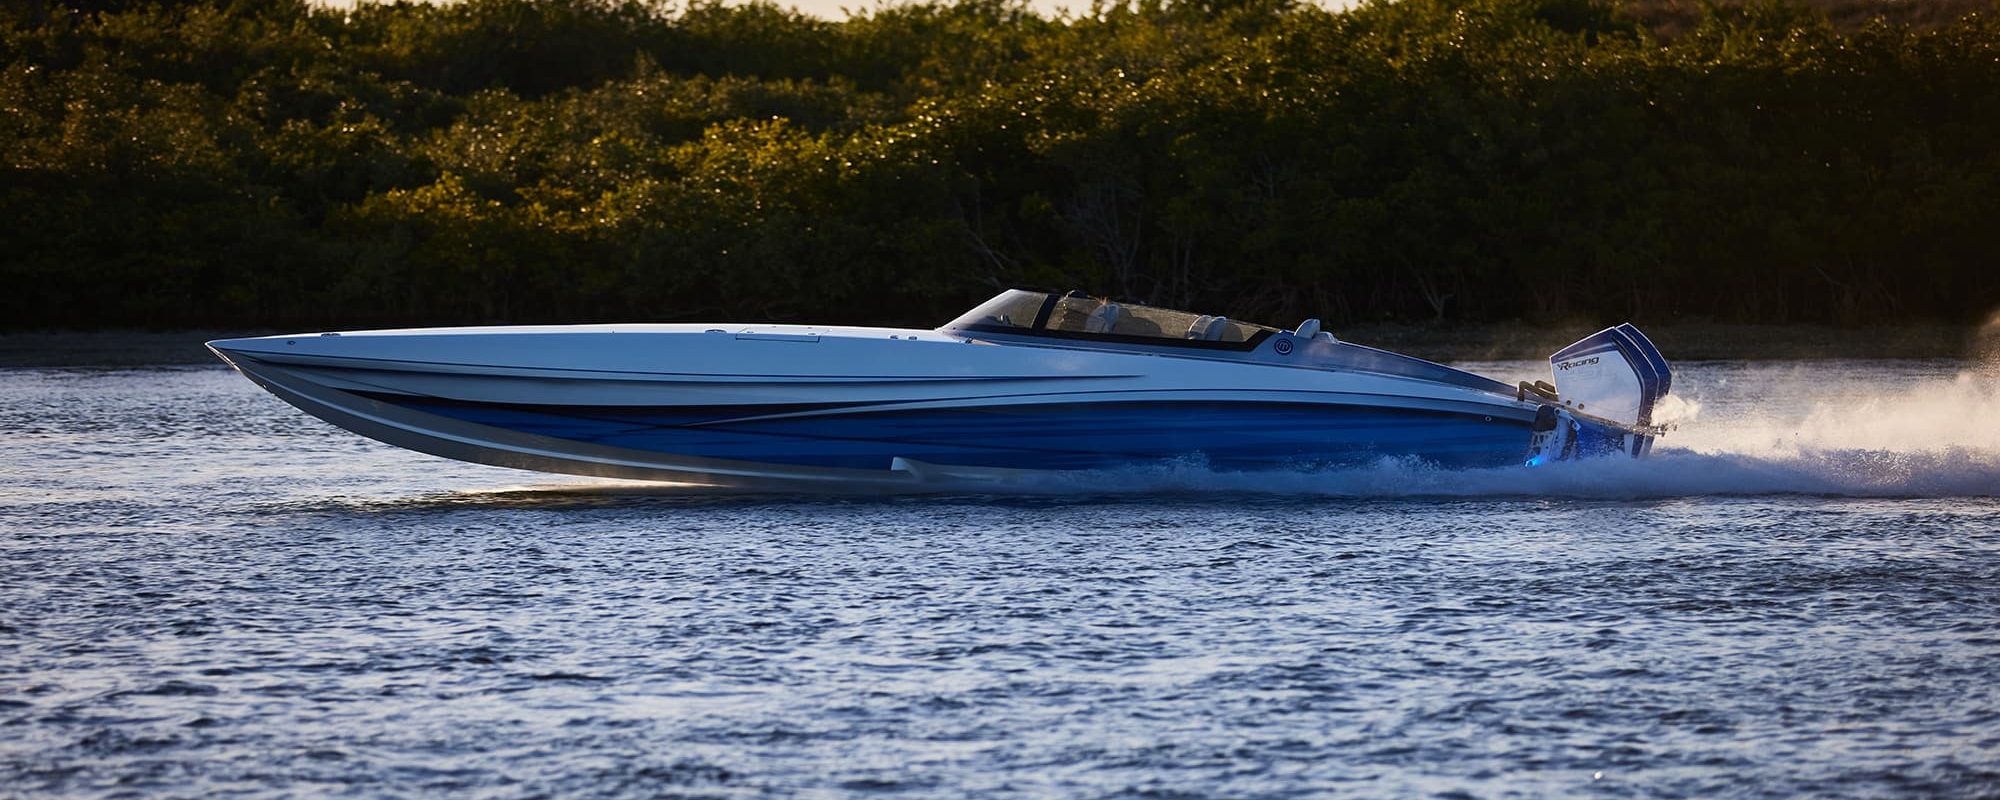 Mystic Powerboats photographed on January 16-17, 2021 in New Smyrna Beach, Florida. (All Photos Copyright 2020 James Gilbert Photo)

904-495-5729
JamesGilbertPhoto@gmail.com
www.JamesGilbertPhoto.com